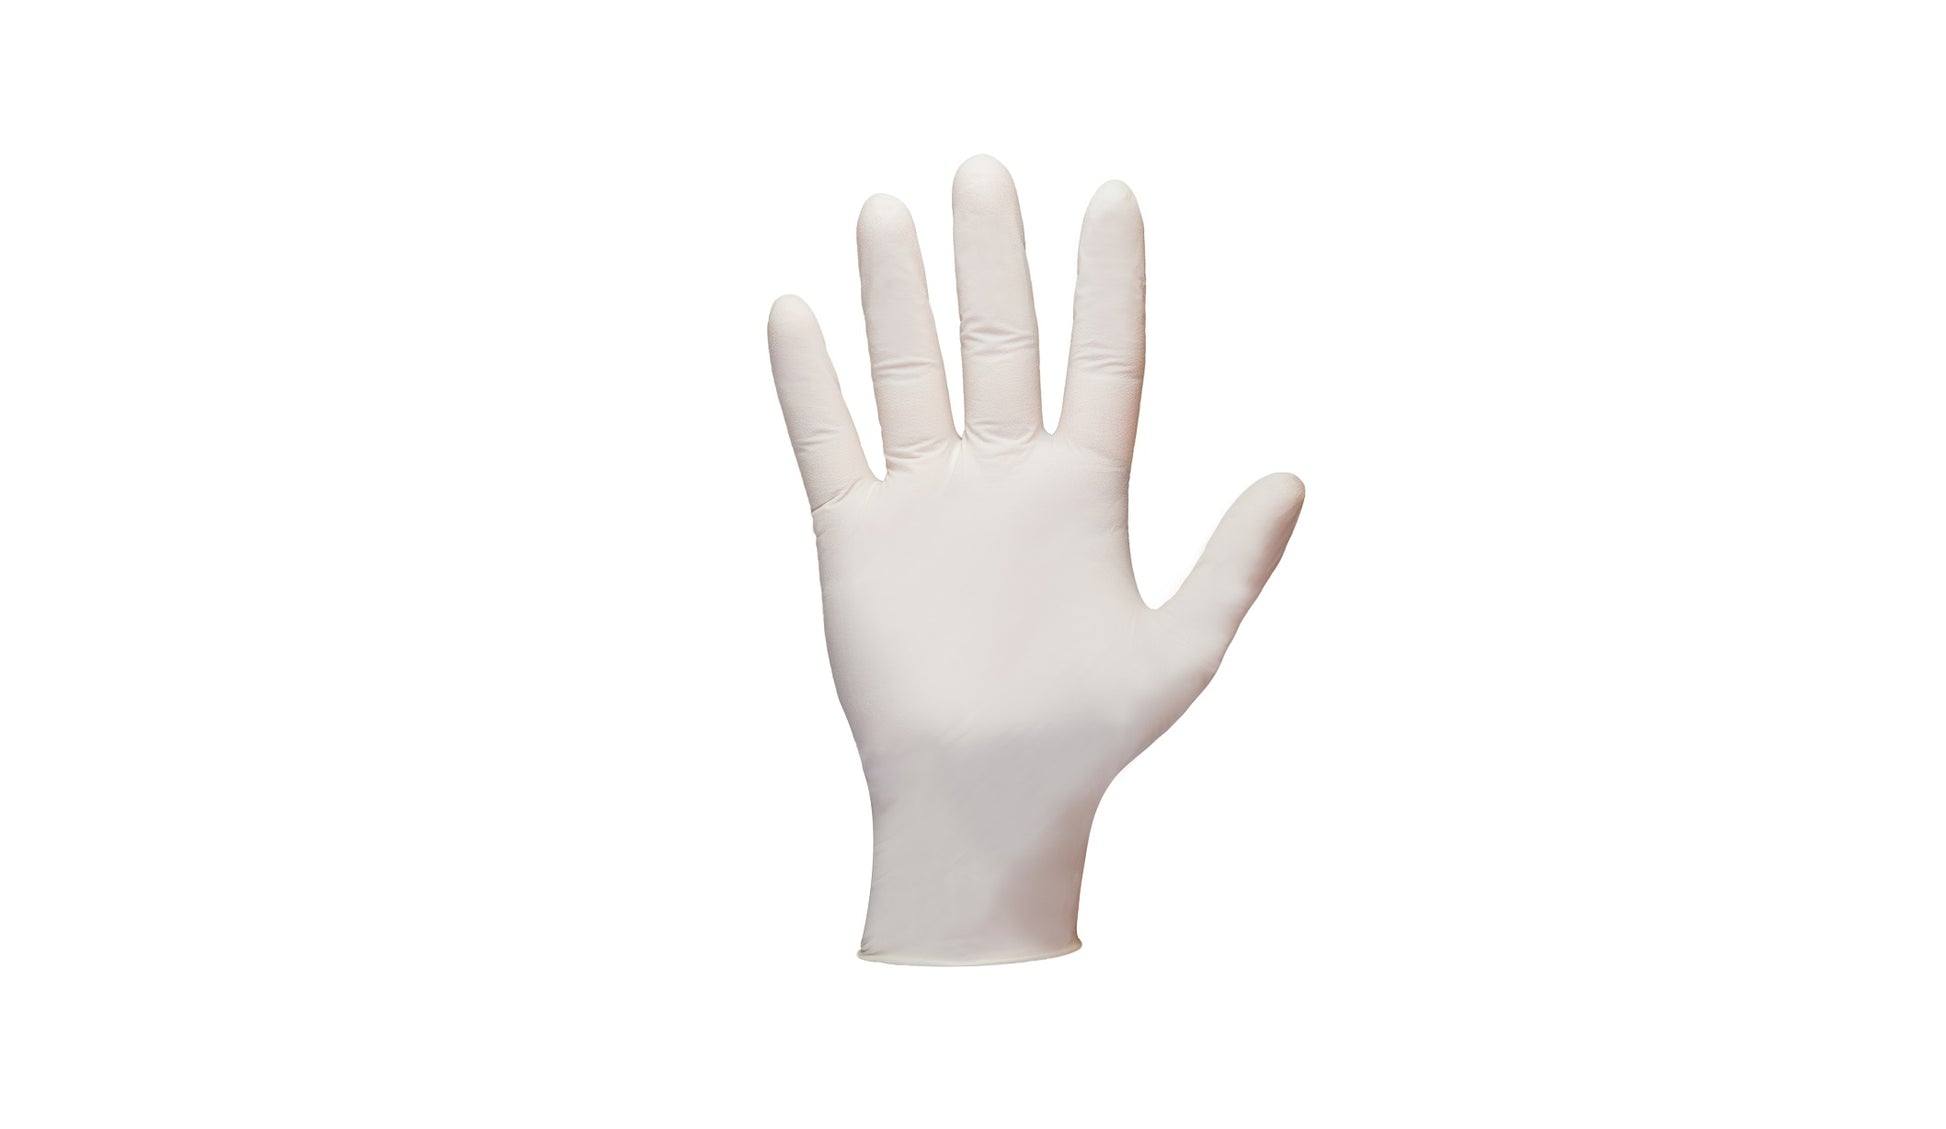 10000 Series – 5.5g Shamrock Latex Exam Powder Free Gloves